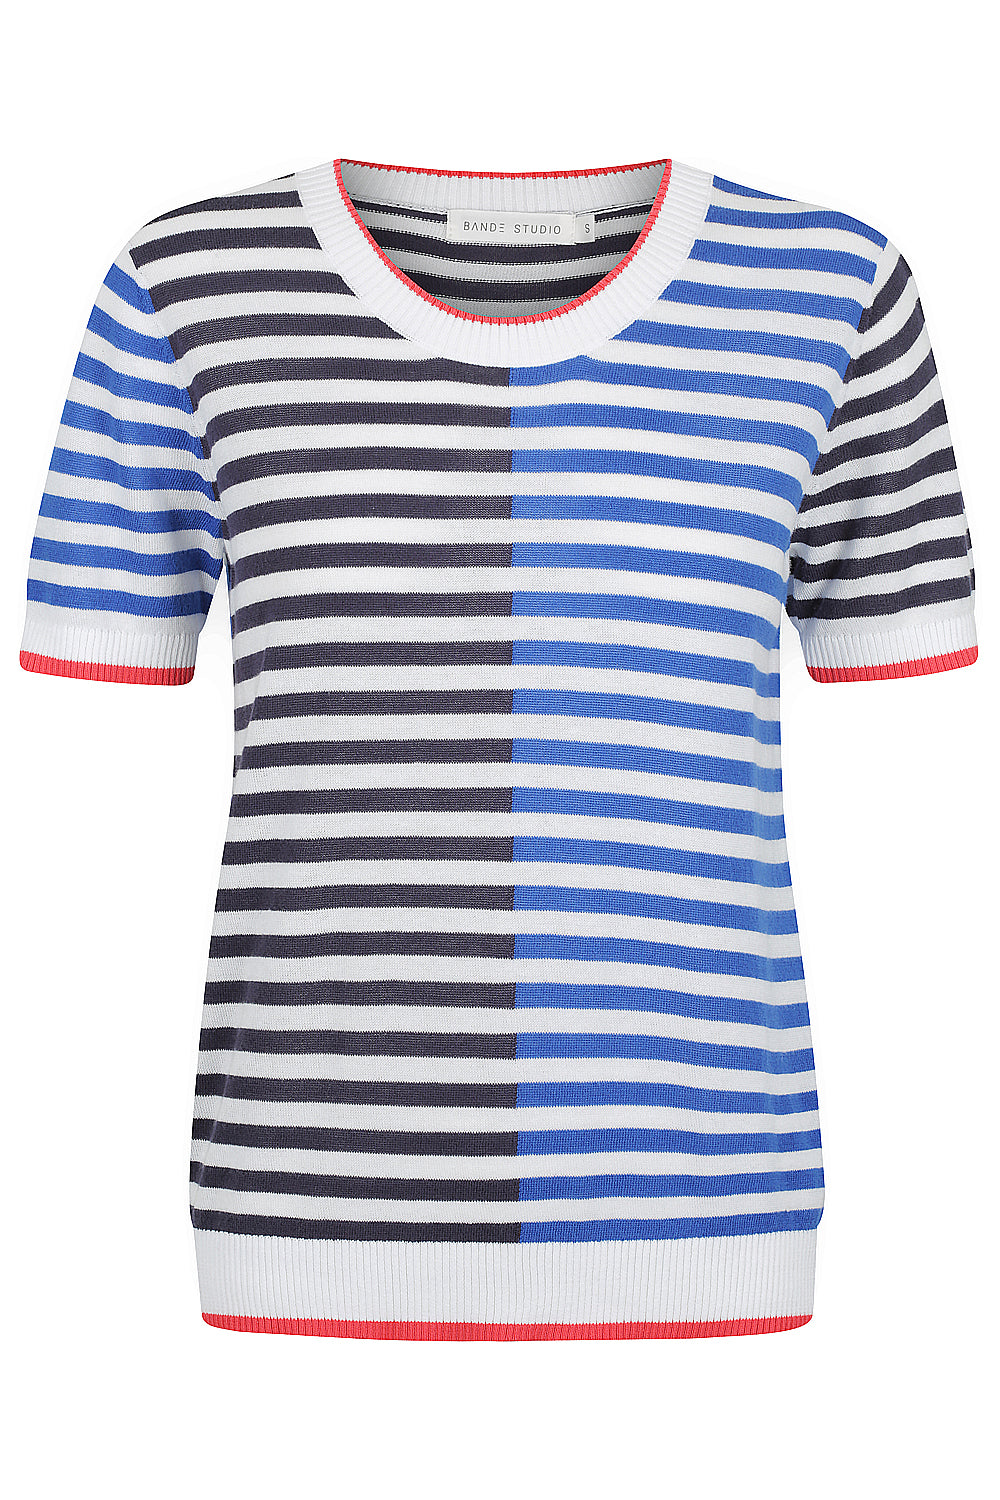 Colour Block Stripe Knit Tee - navy / ocean